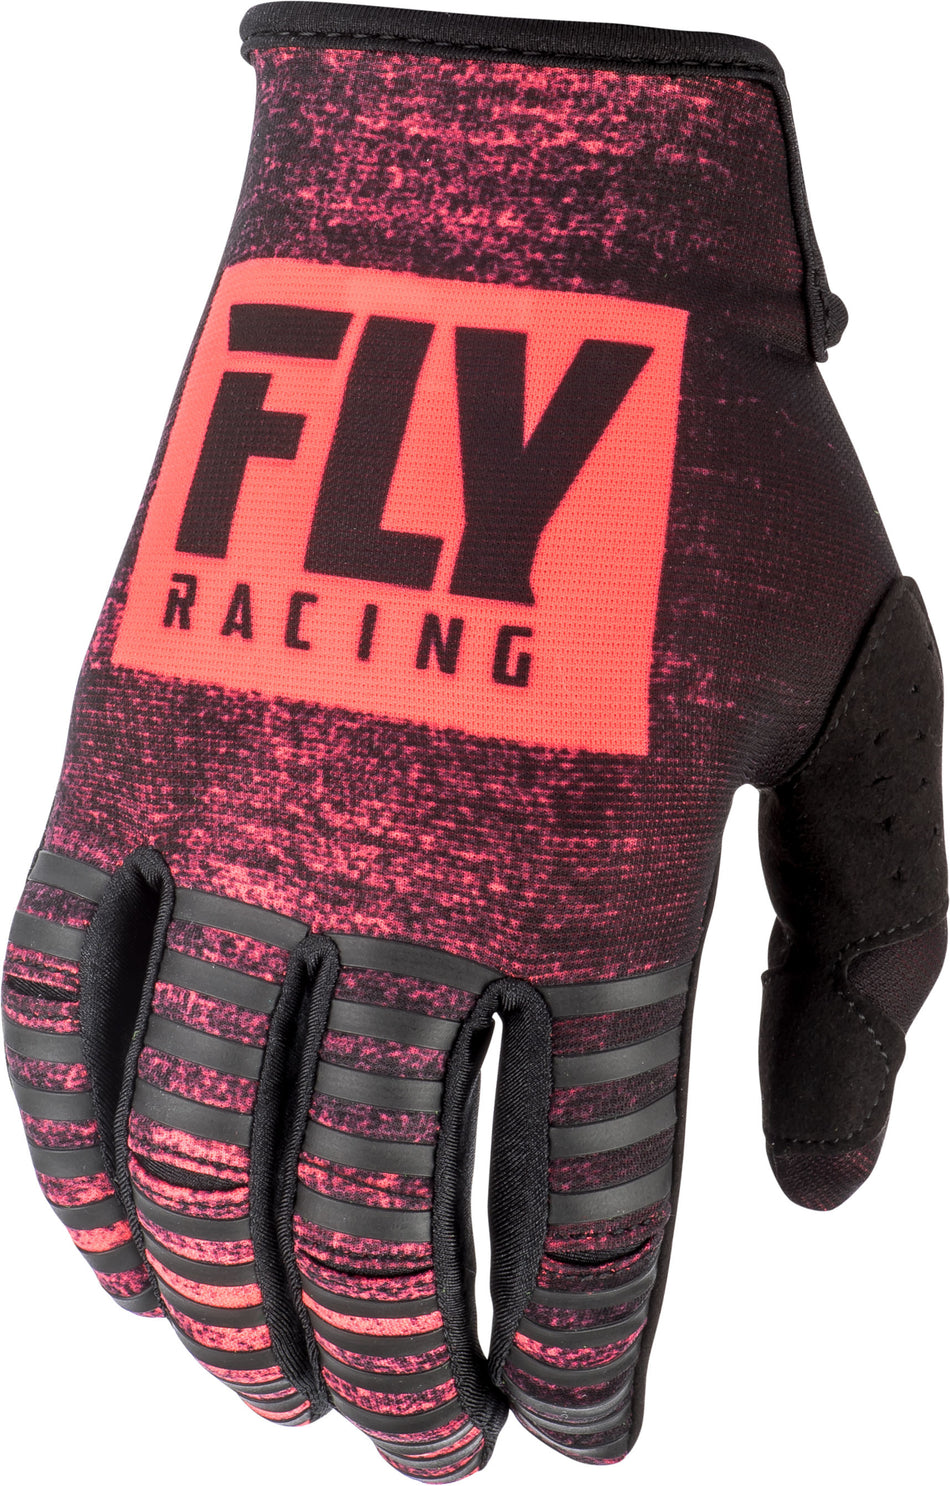 FLY RACING Kinetic Noiz Gloves Neon Red/Black Sz 10 372-51210